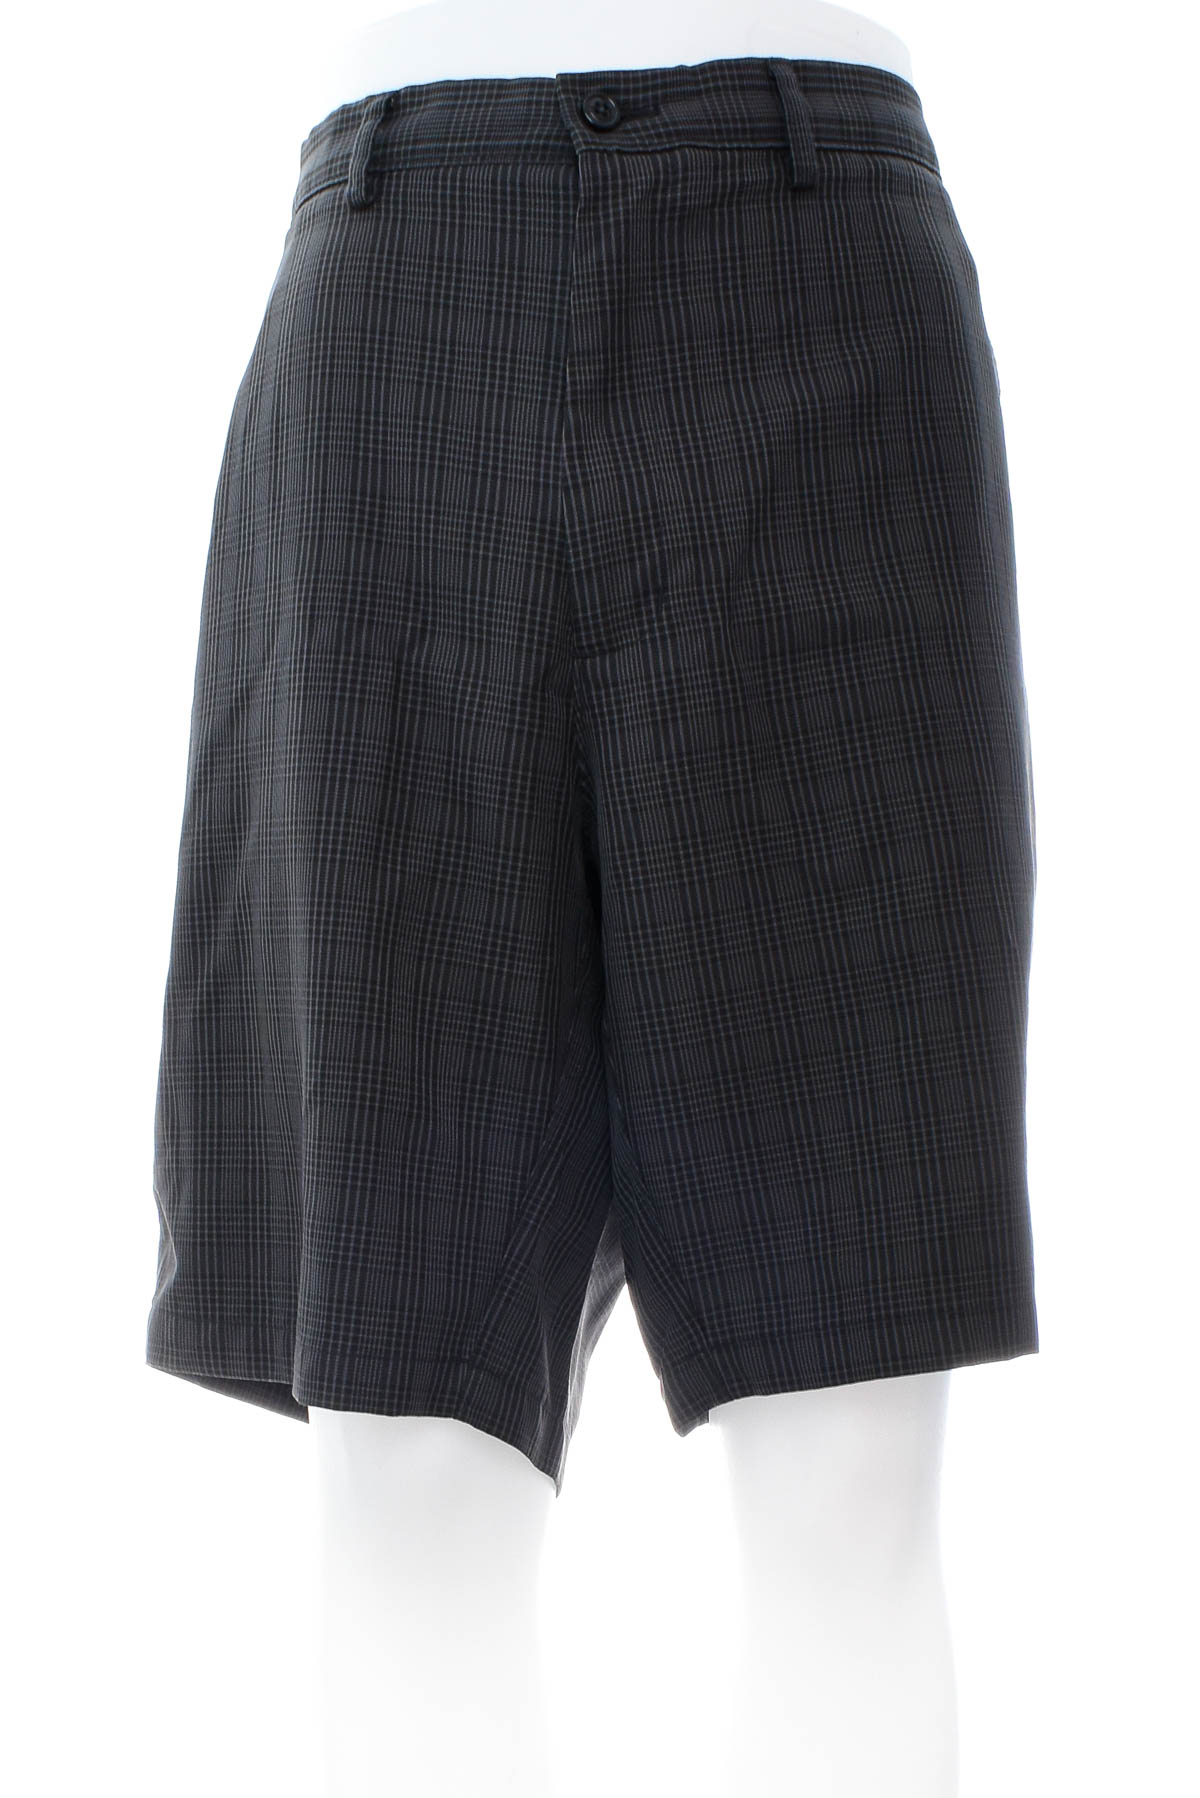 Men's shorts - HAGGAR - 0